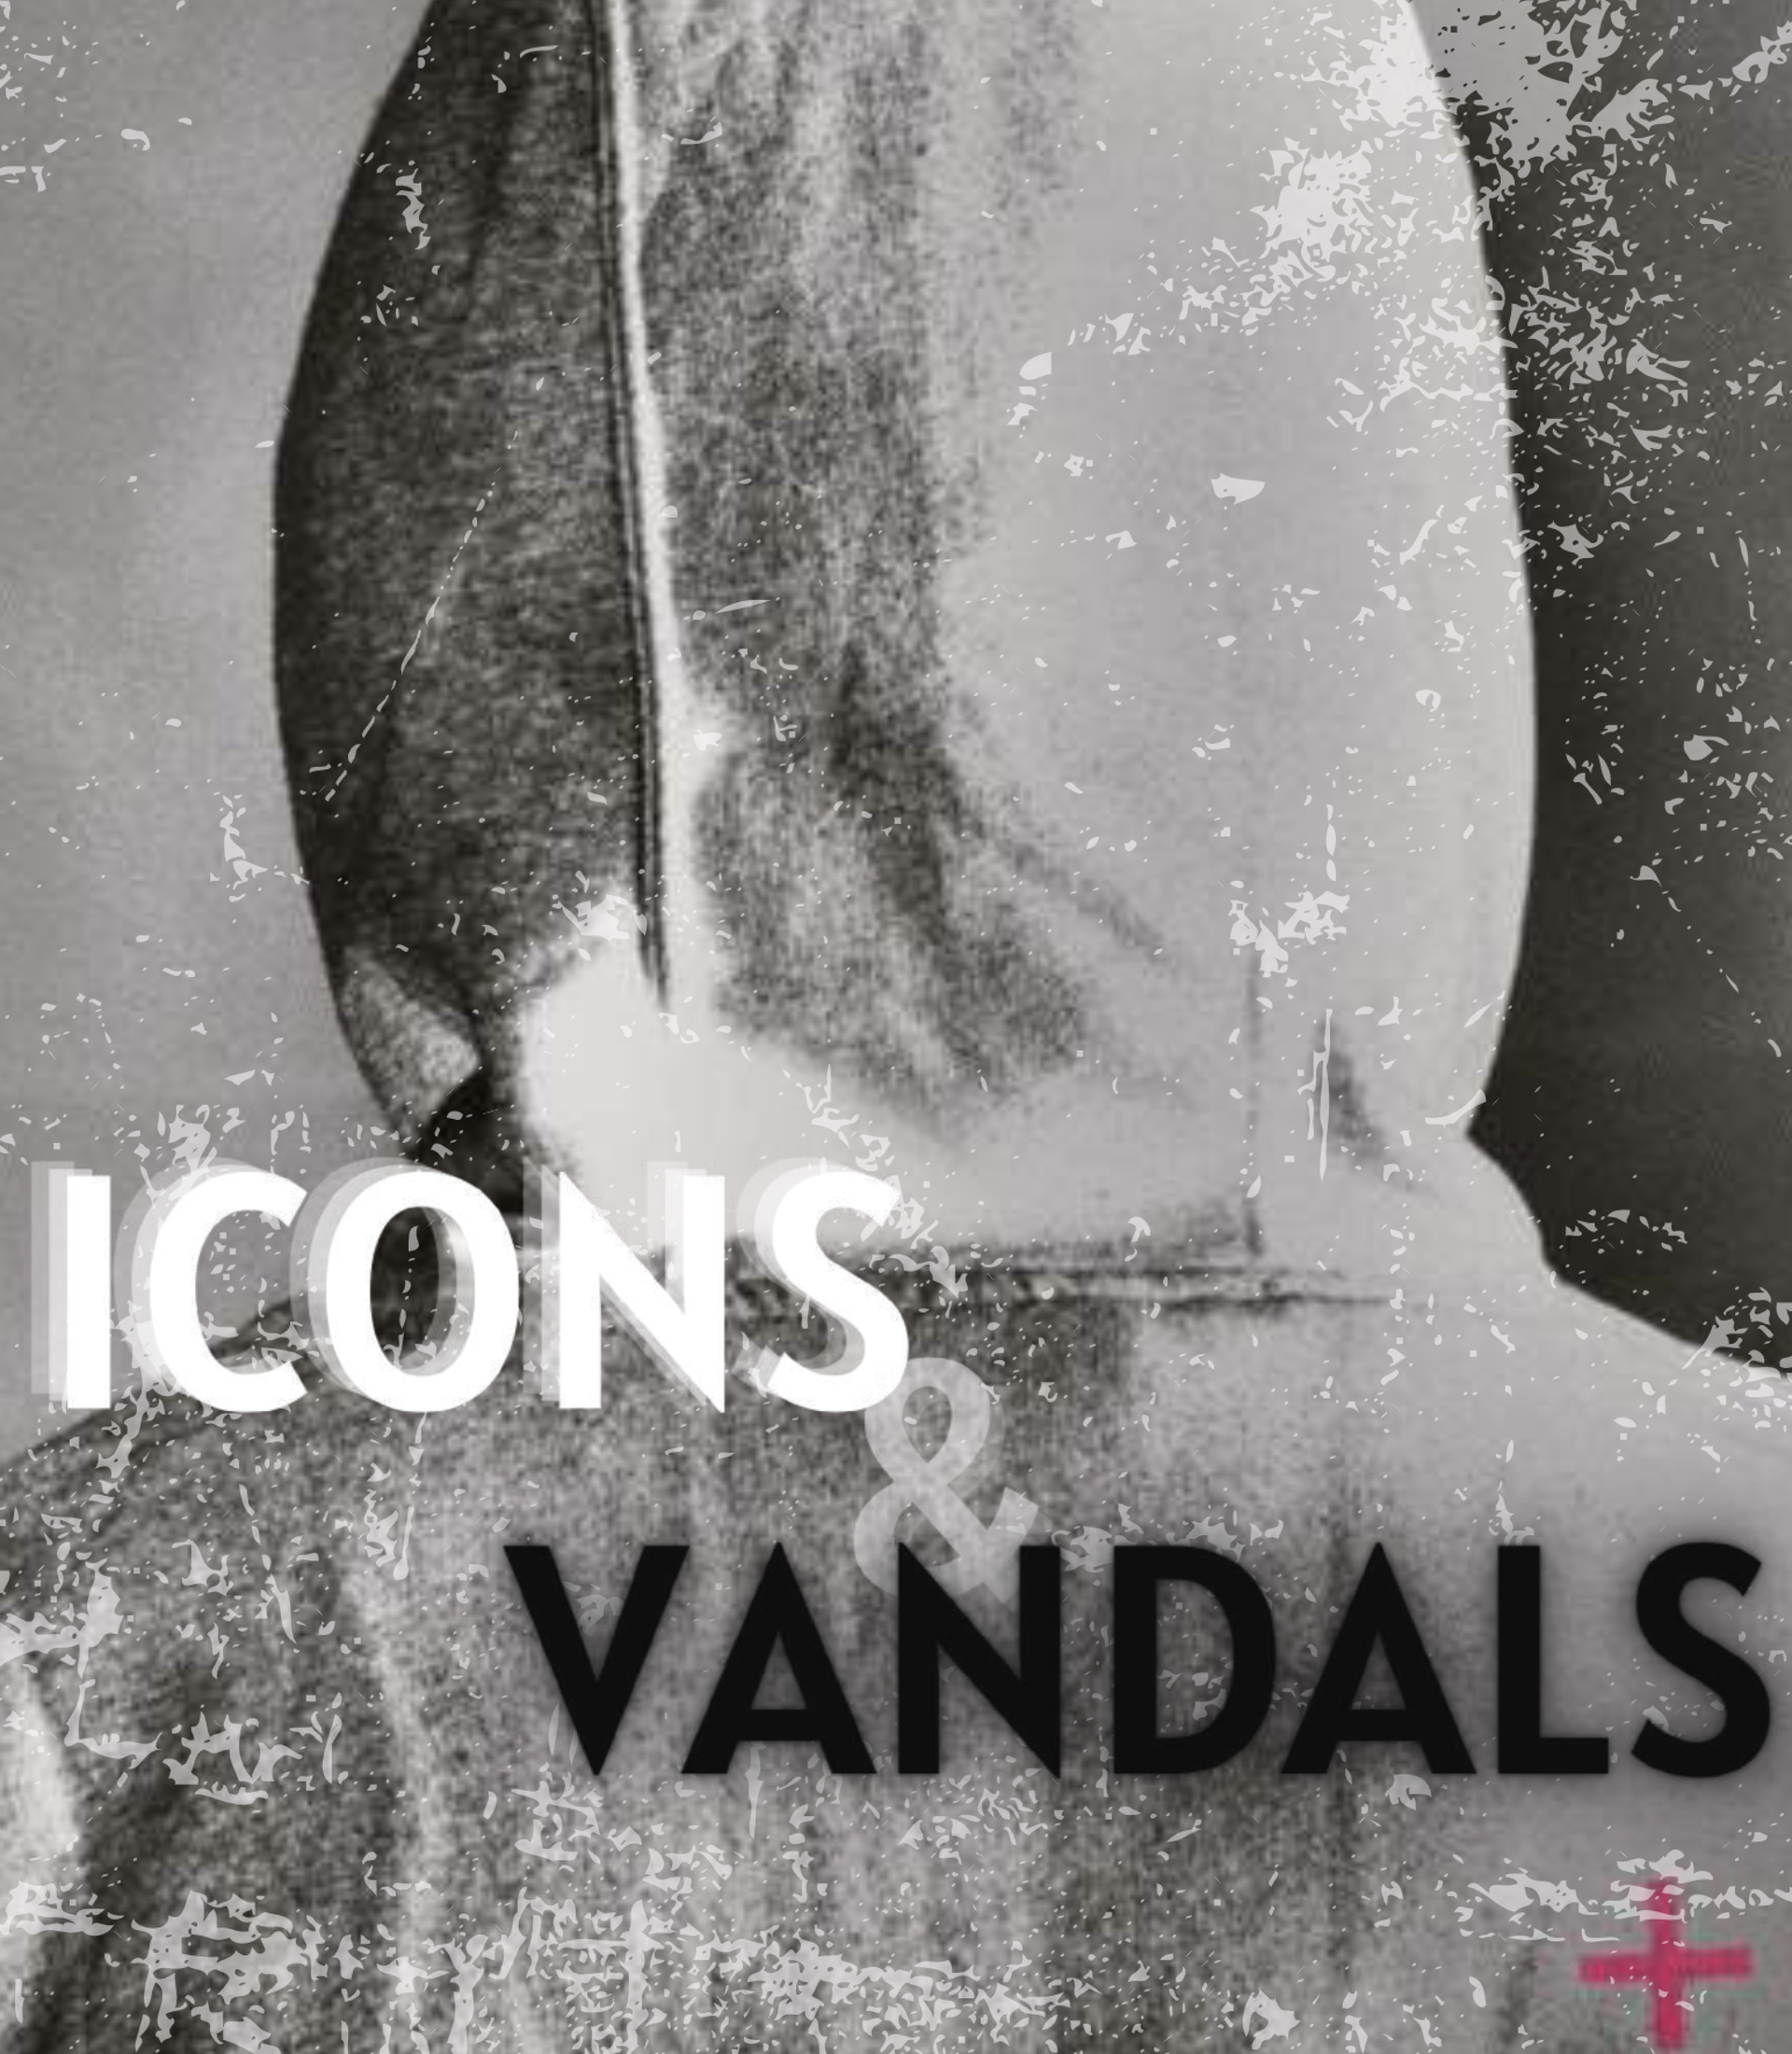 Icons & Vandals Catalog